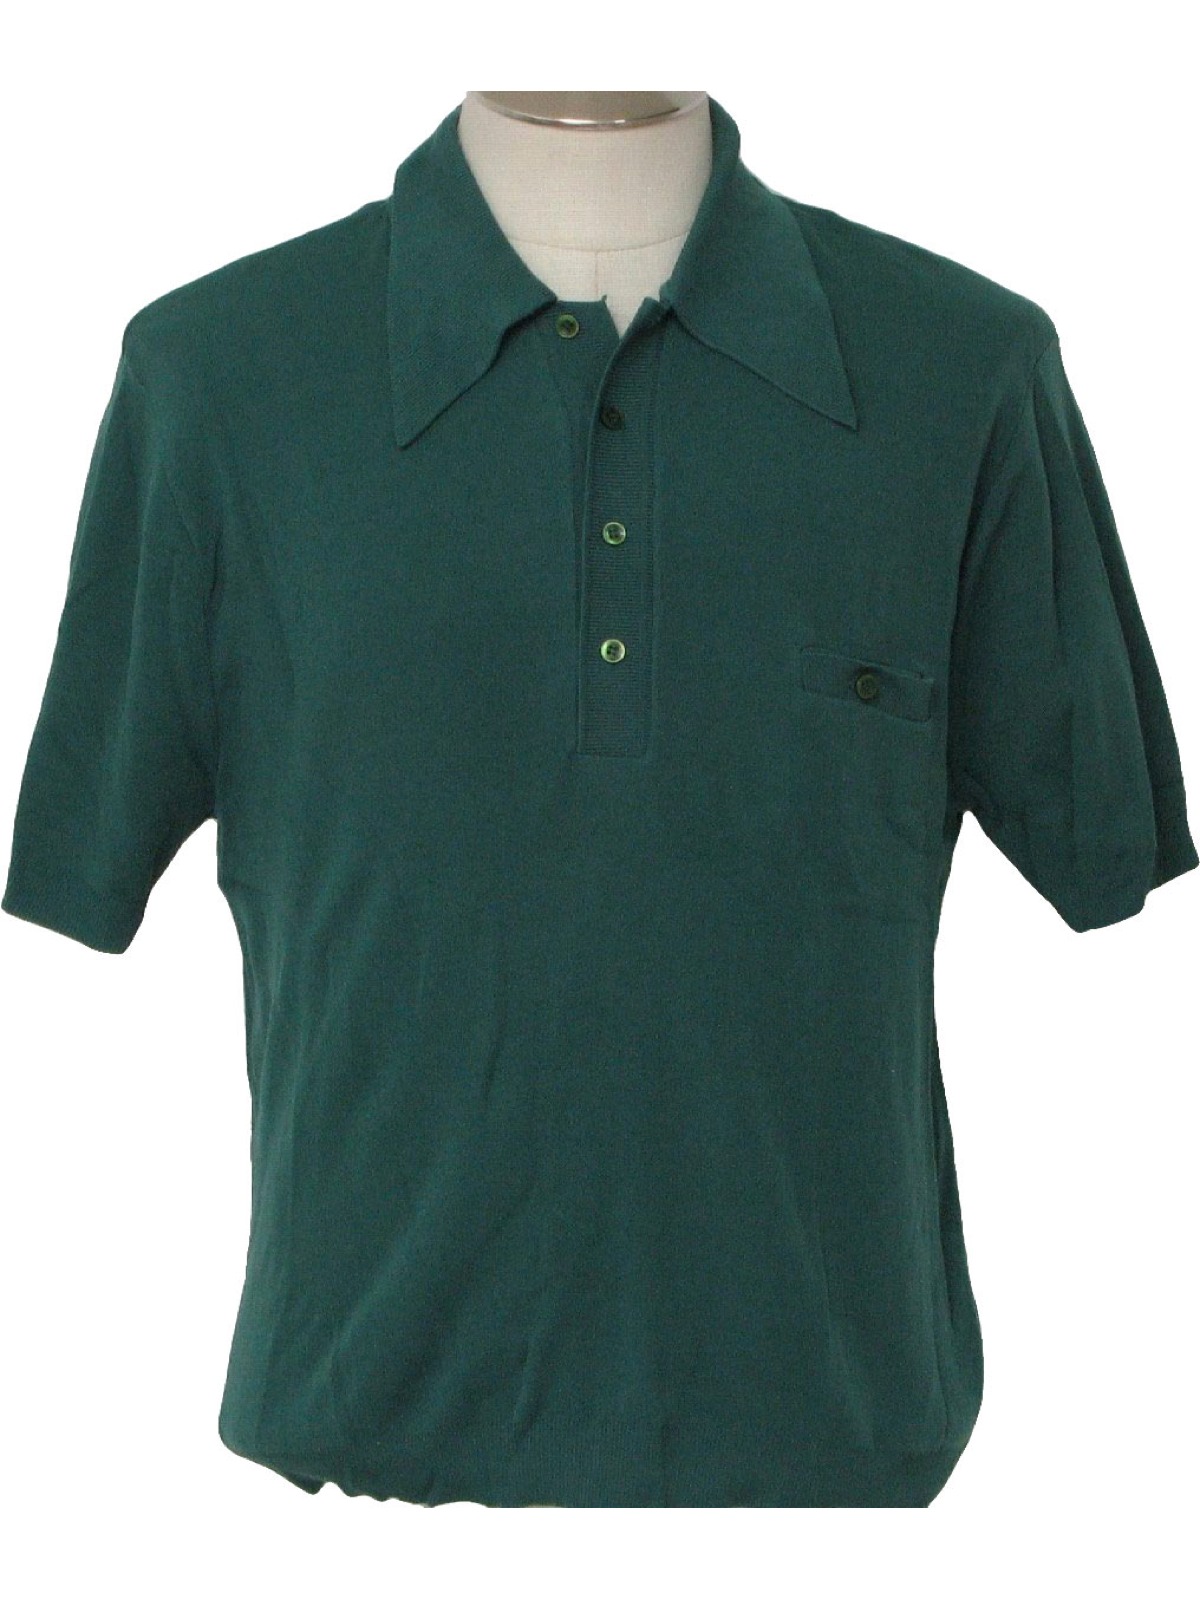 1970s Knit Shirt: Early 70s -No Label- Mens deep sage green nylon knit ...